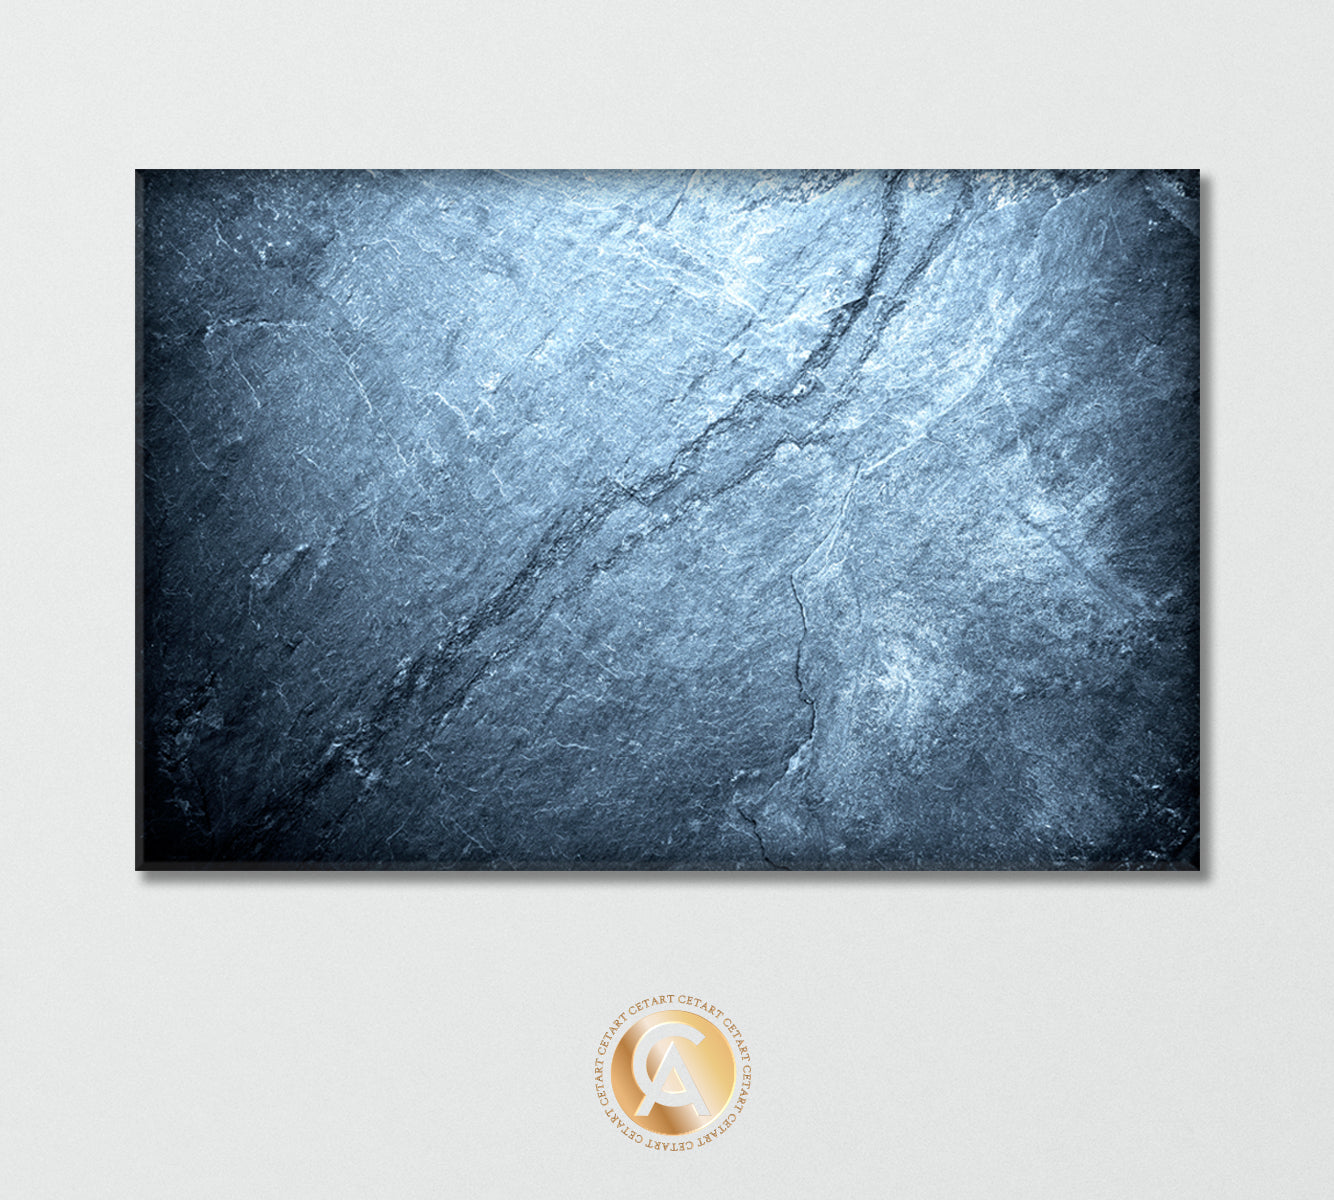 Dark Gray Abstract Grunge Pattern Canvas Print-Canvas Print-CetArt-1 Panel-24x16 inches-CetArt